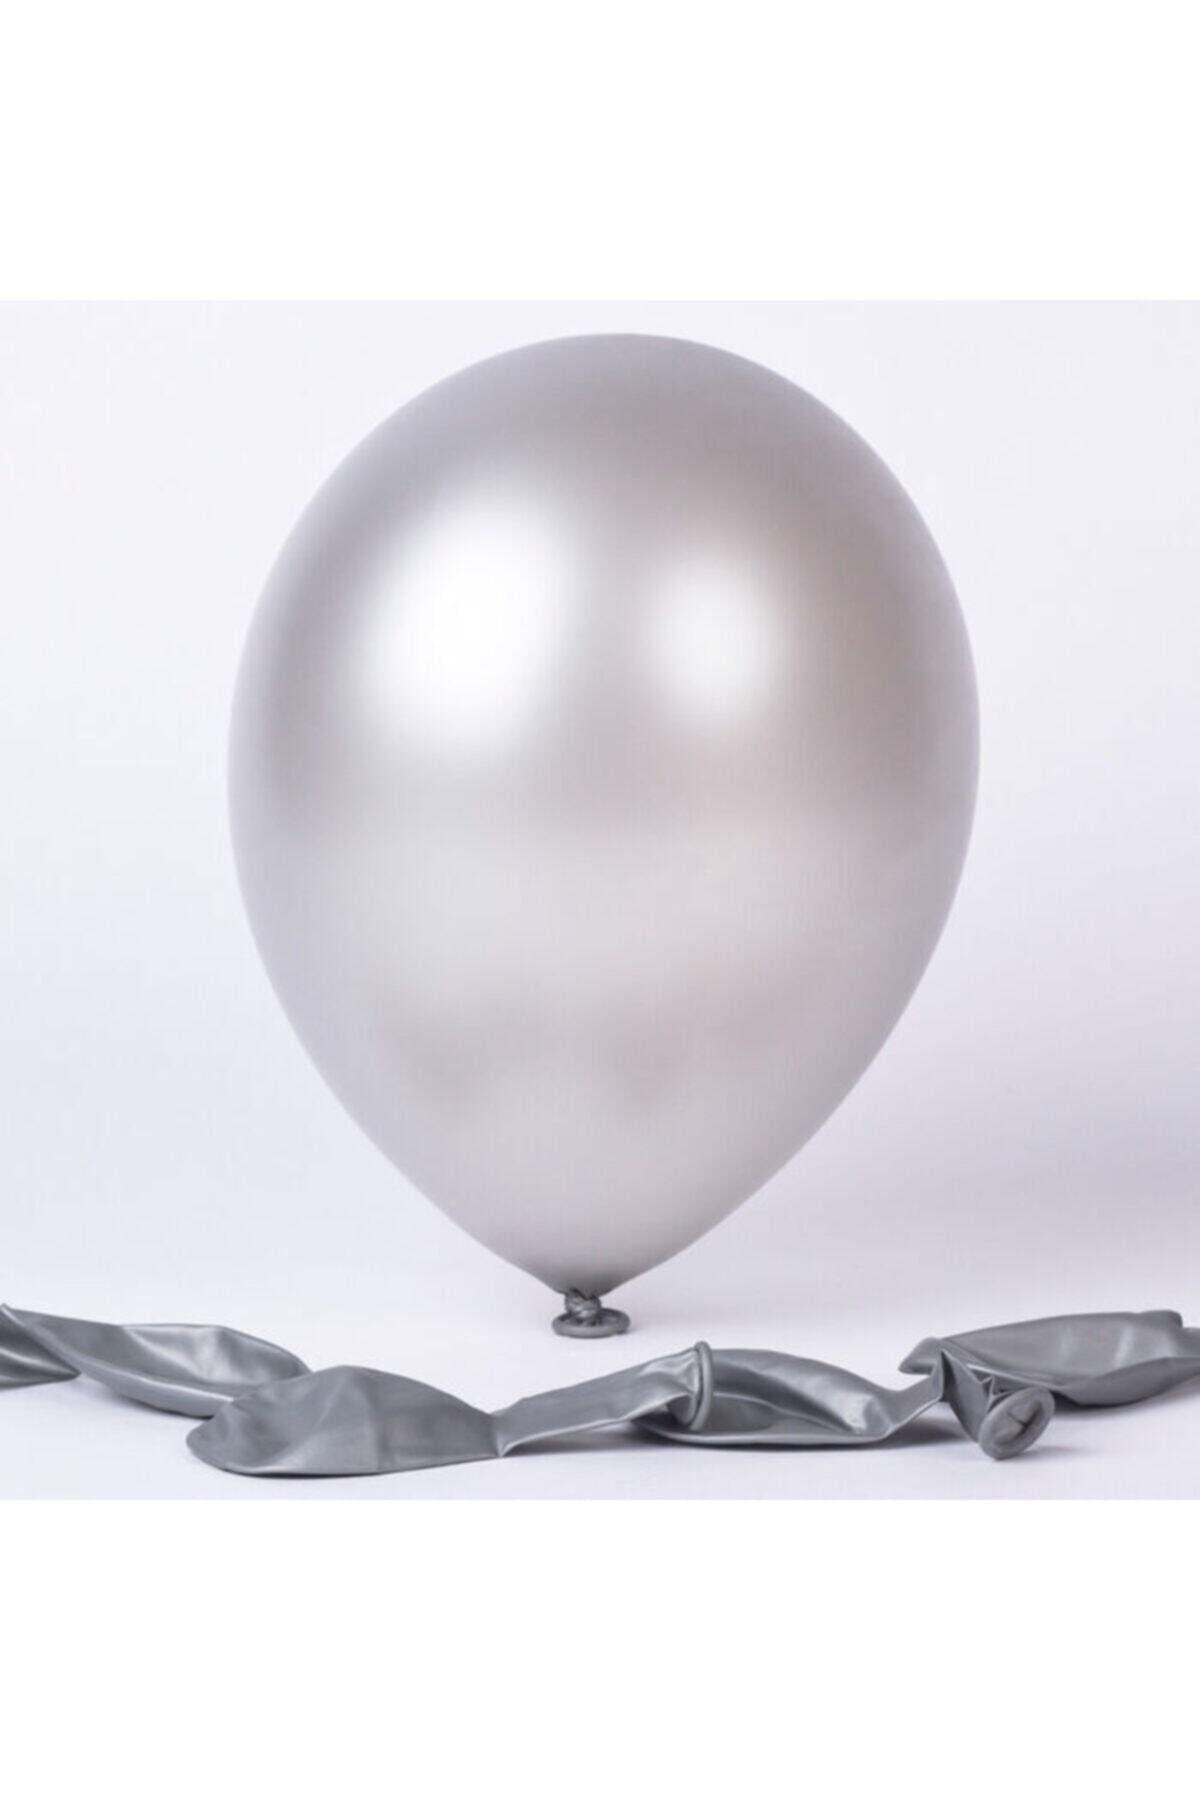 araget Metalik Latex Balon Gümüş Renk 10 Adet